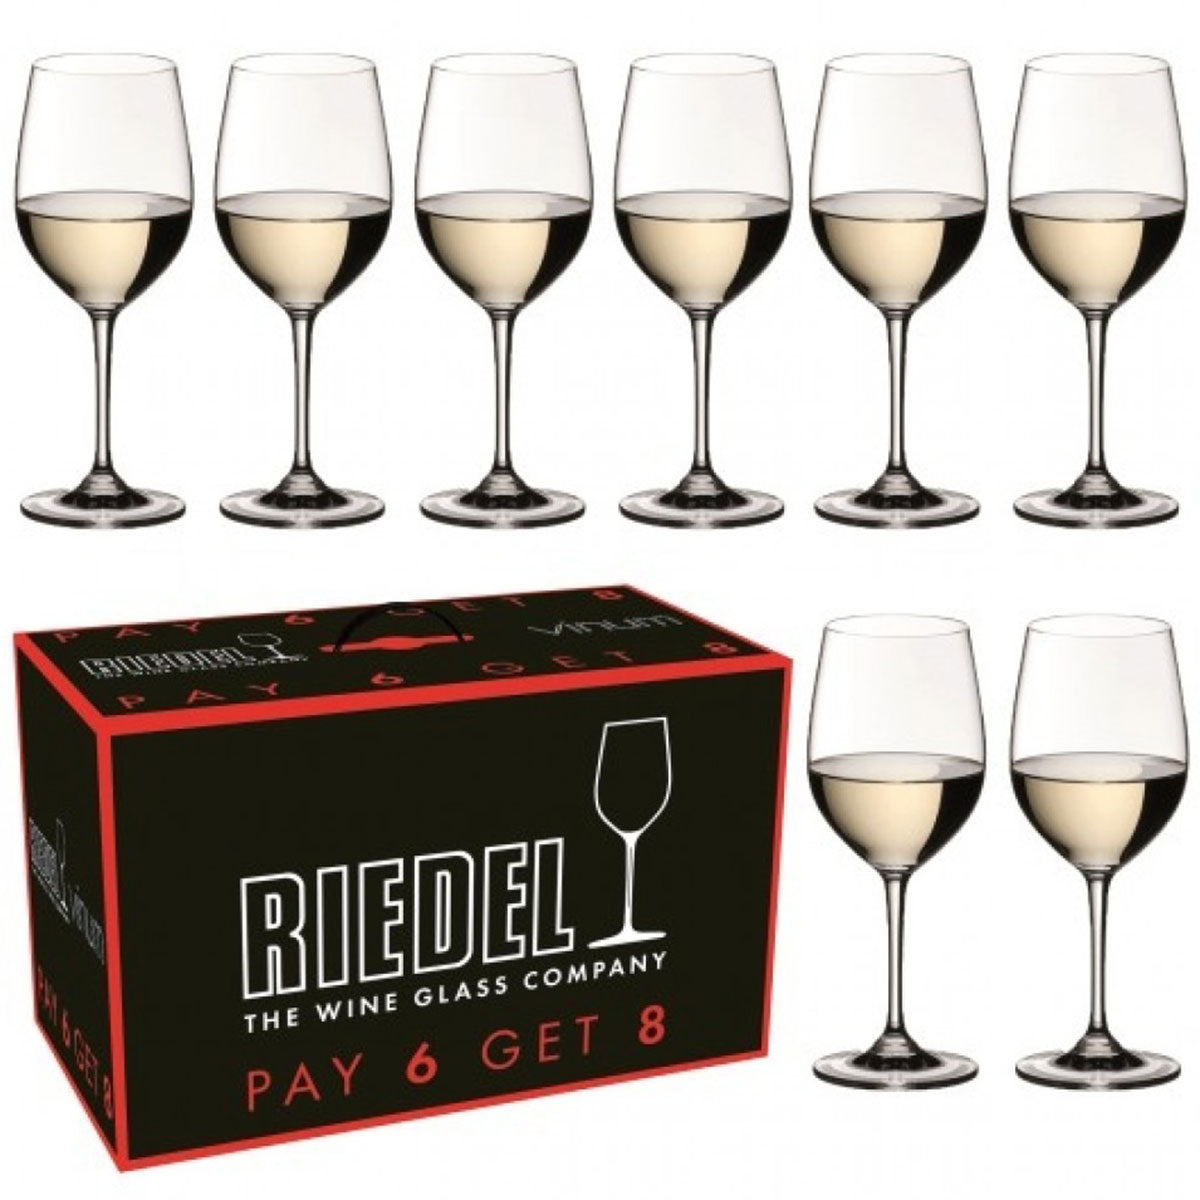 Riedel Vinum Viognier/Chardonnay (Pay 6 Get 8) (7416/05)